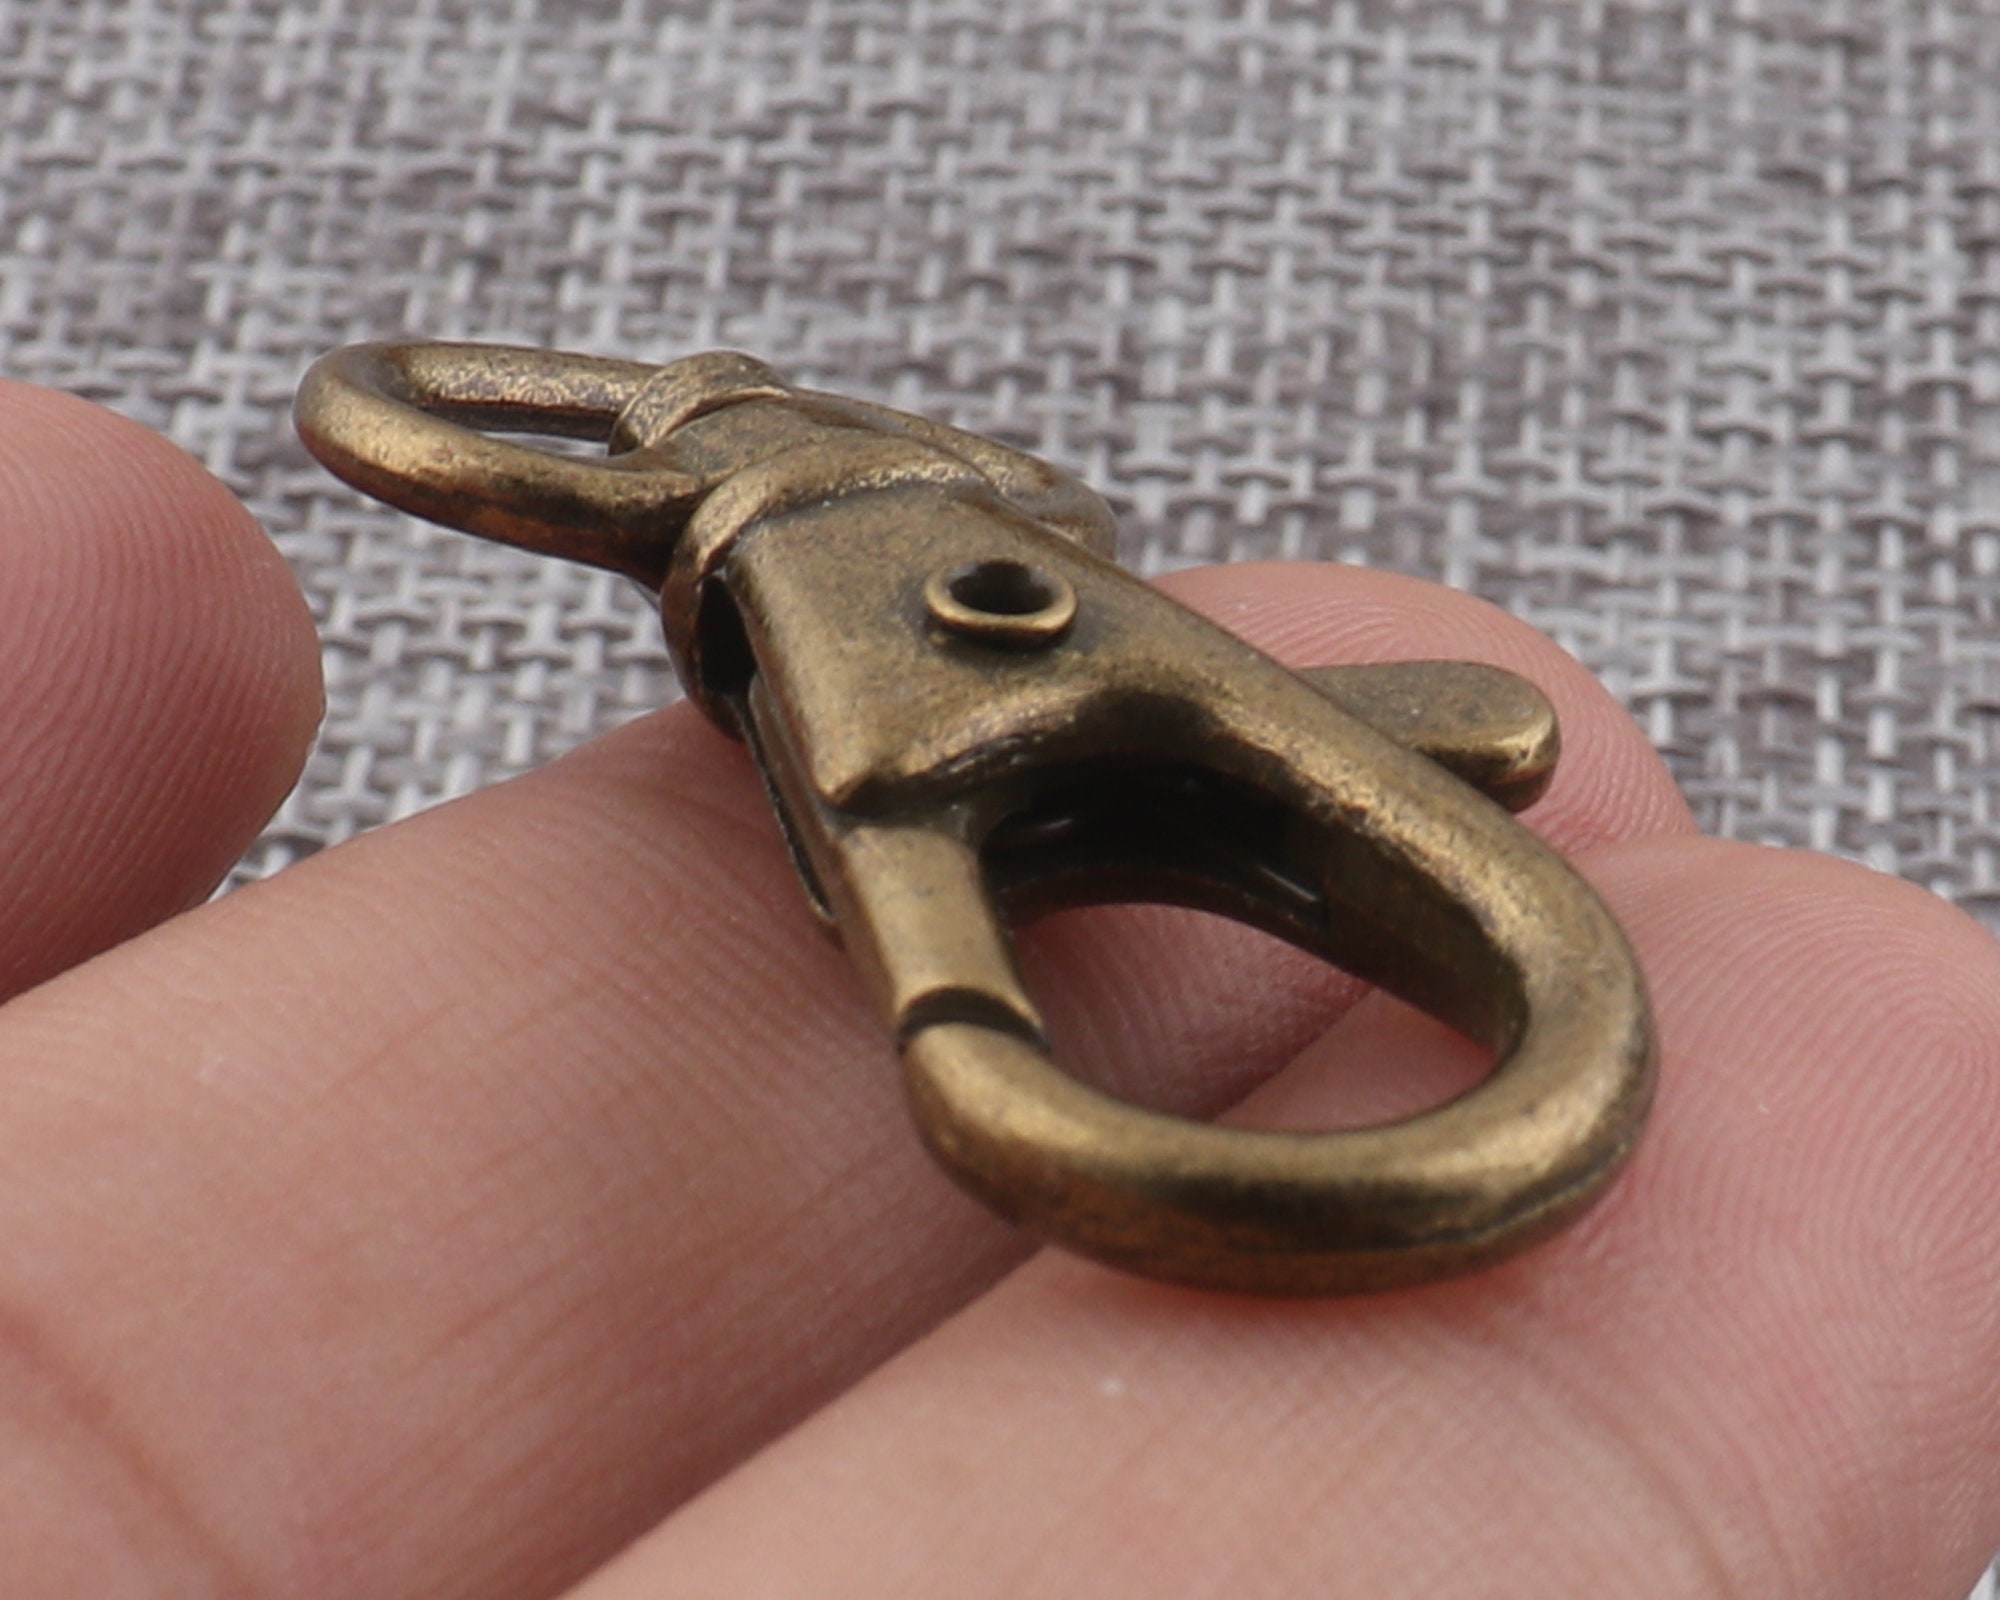 Antique Brass Swivel Snap Clasp,1438mm Bronze Trigger Snap Hooks Push Gate  Clasp,lanyard Hook Belt Buckles for Bag Purse Hardware Supply 